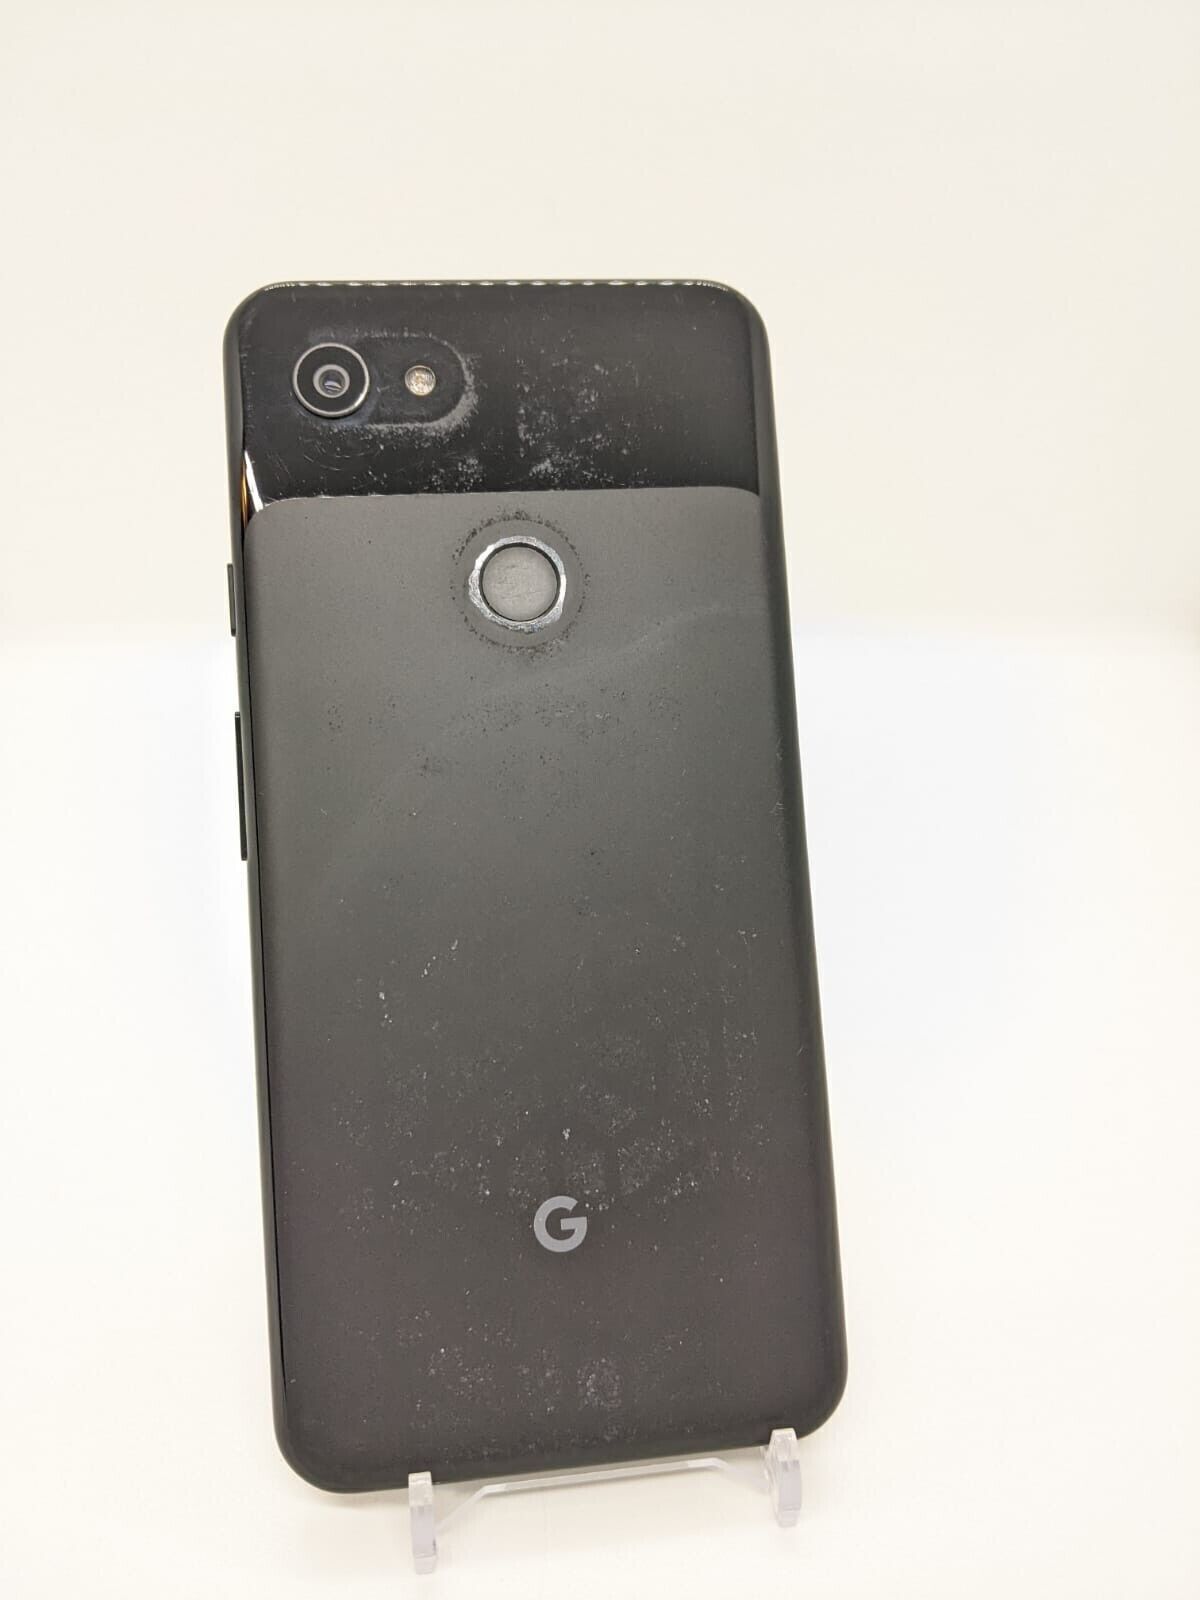 Google Pixel 3a XL 64GB Unlocked 4G LTE Smartphone G020A